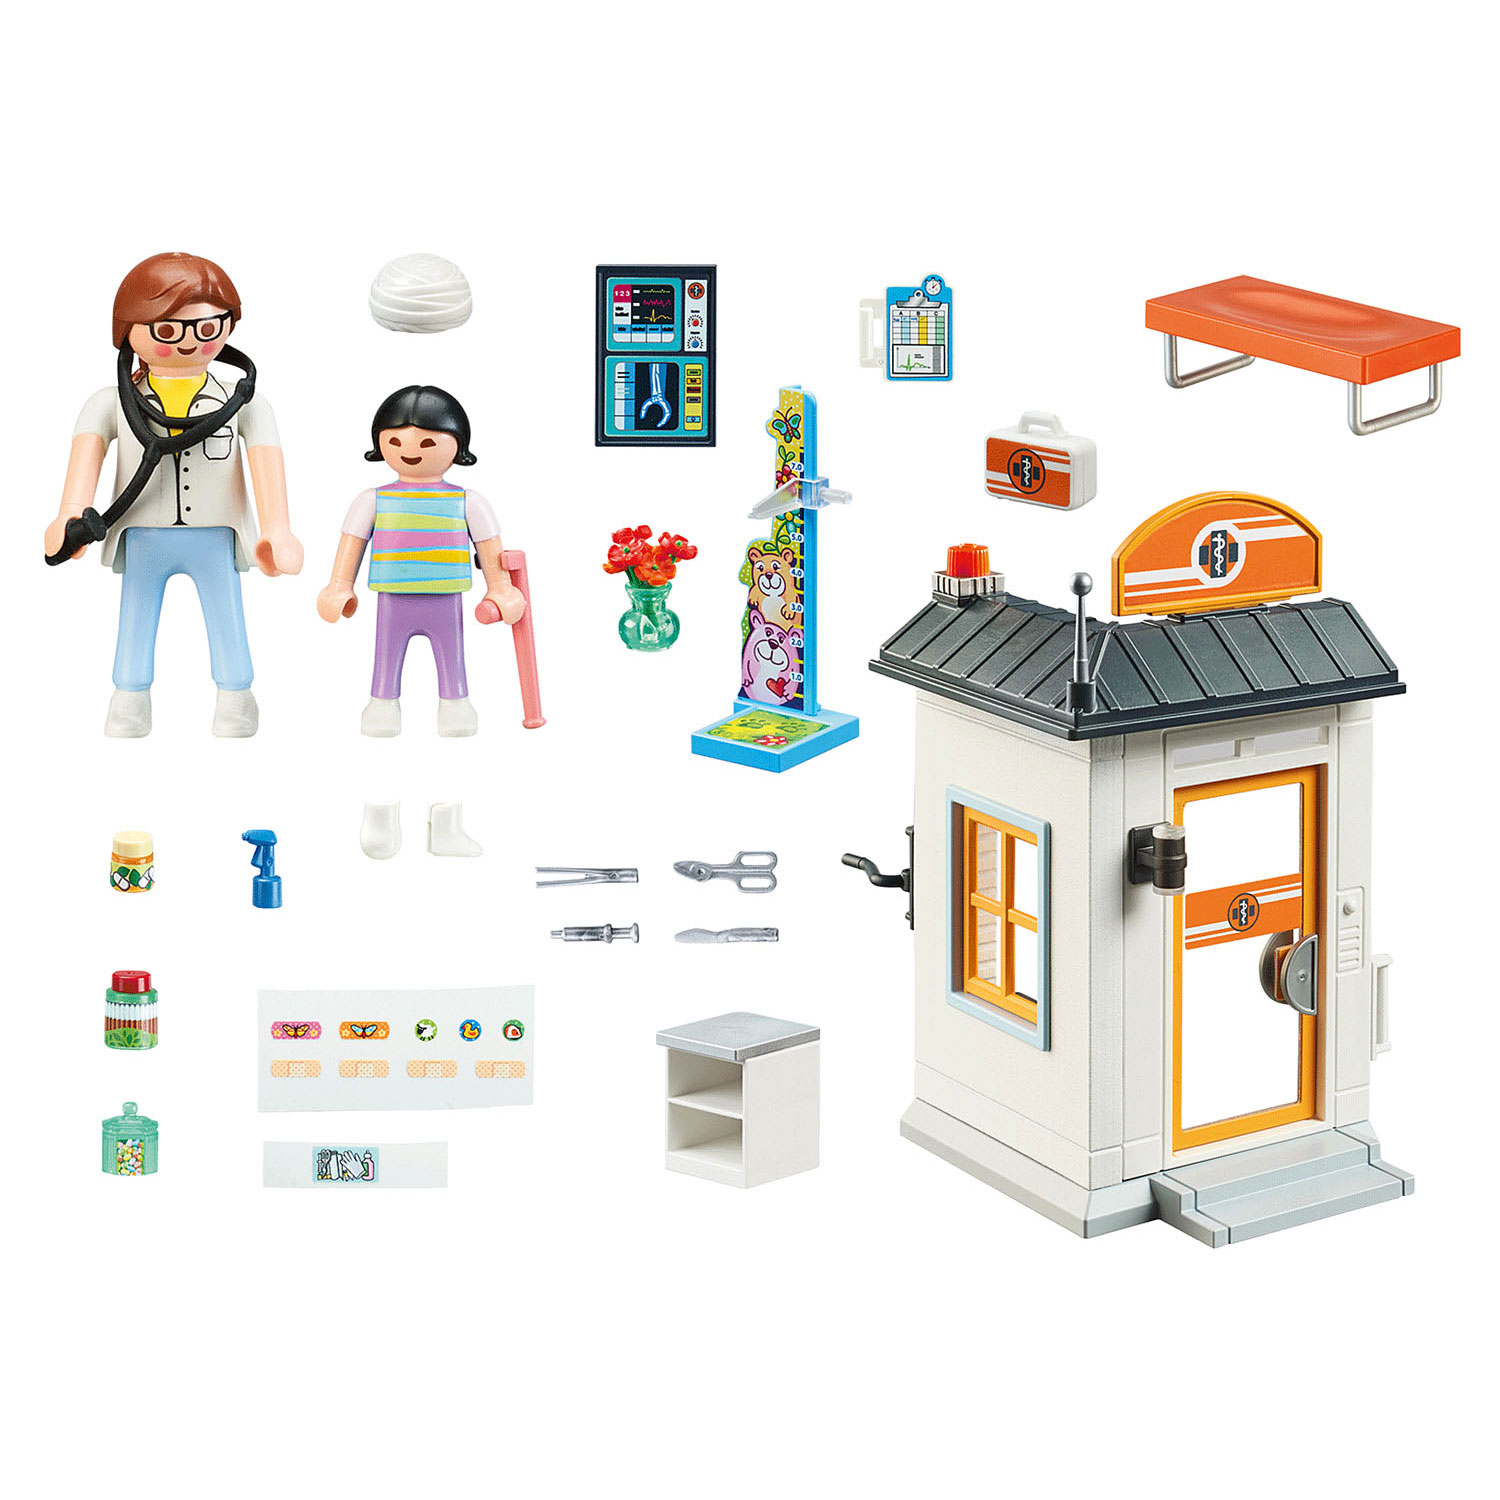 Playmobil City Life Starter Set Pédiatre - 70818